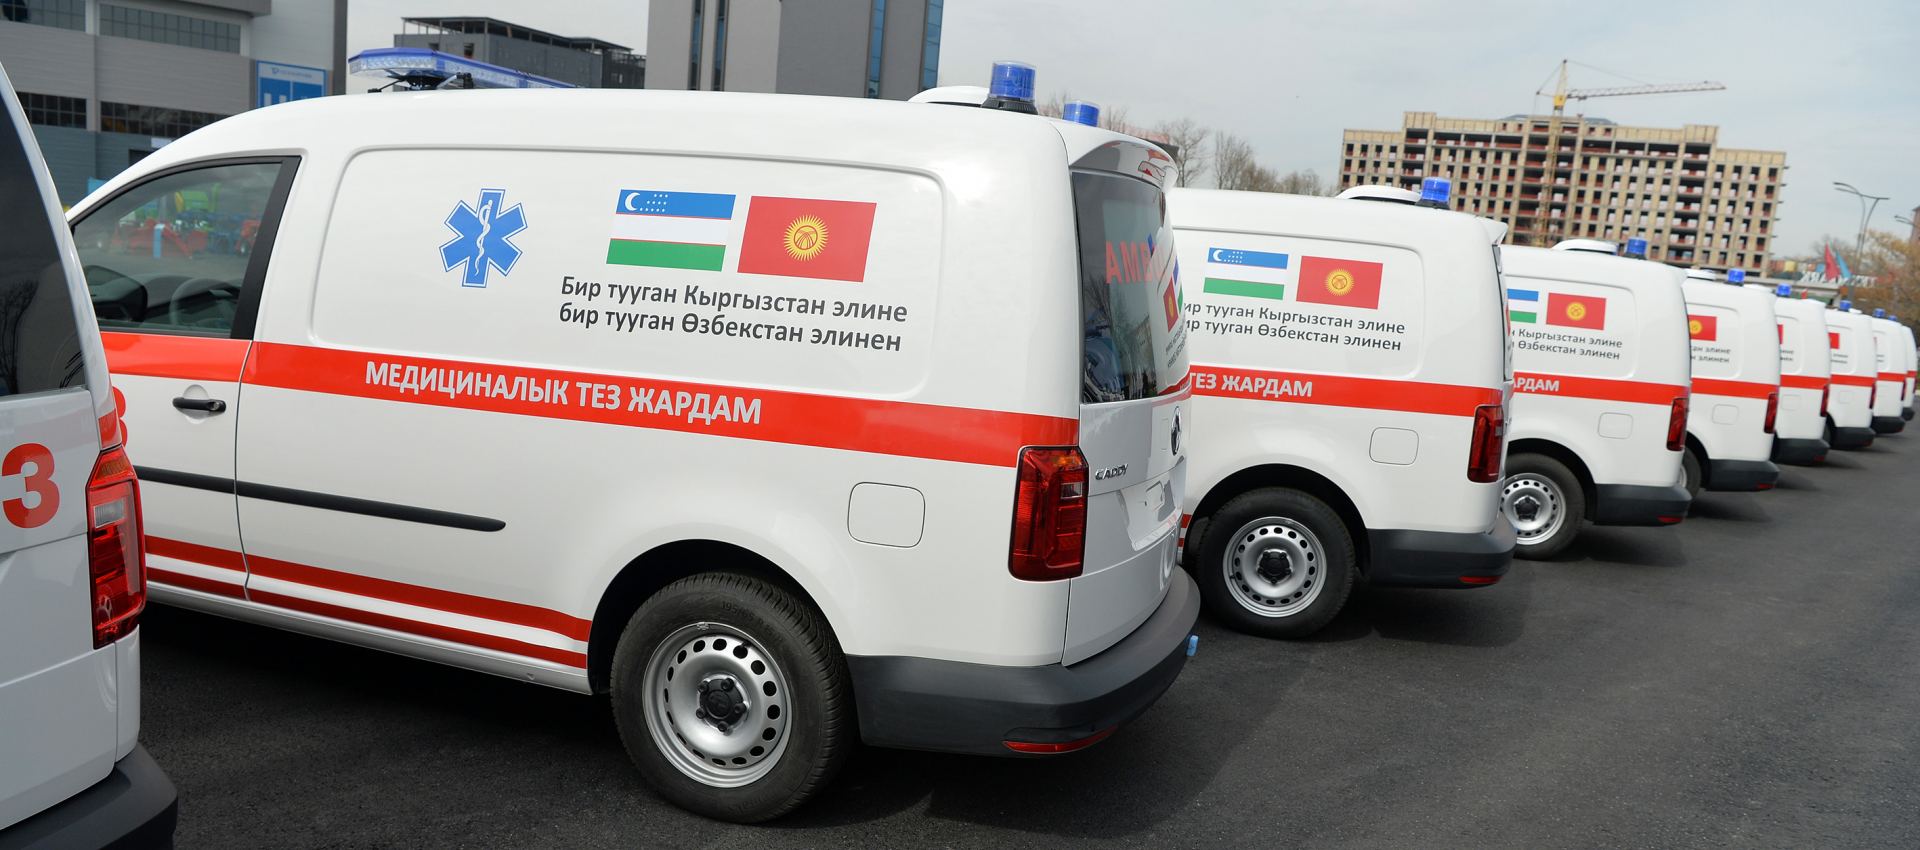 Two Kyrgyz citizens injured in conflict on Kyrgyz-Tajik border